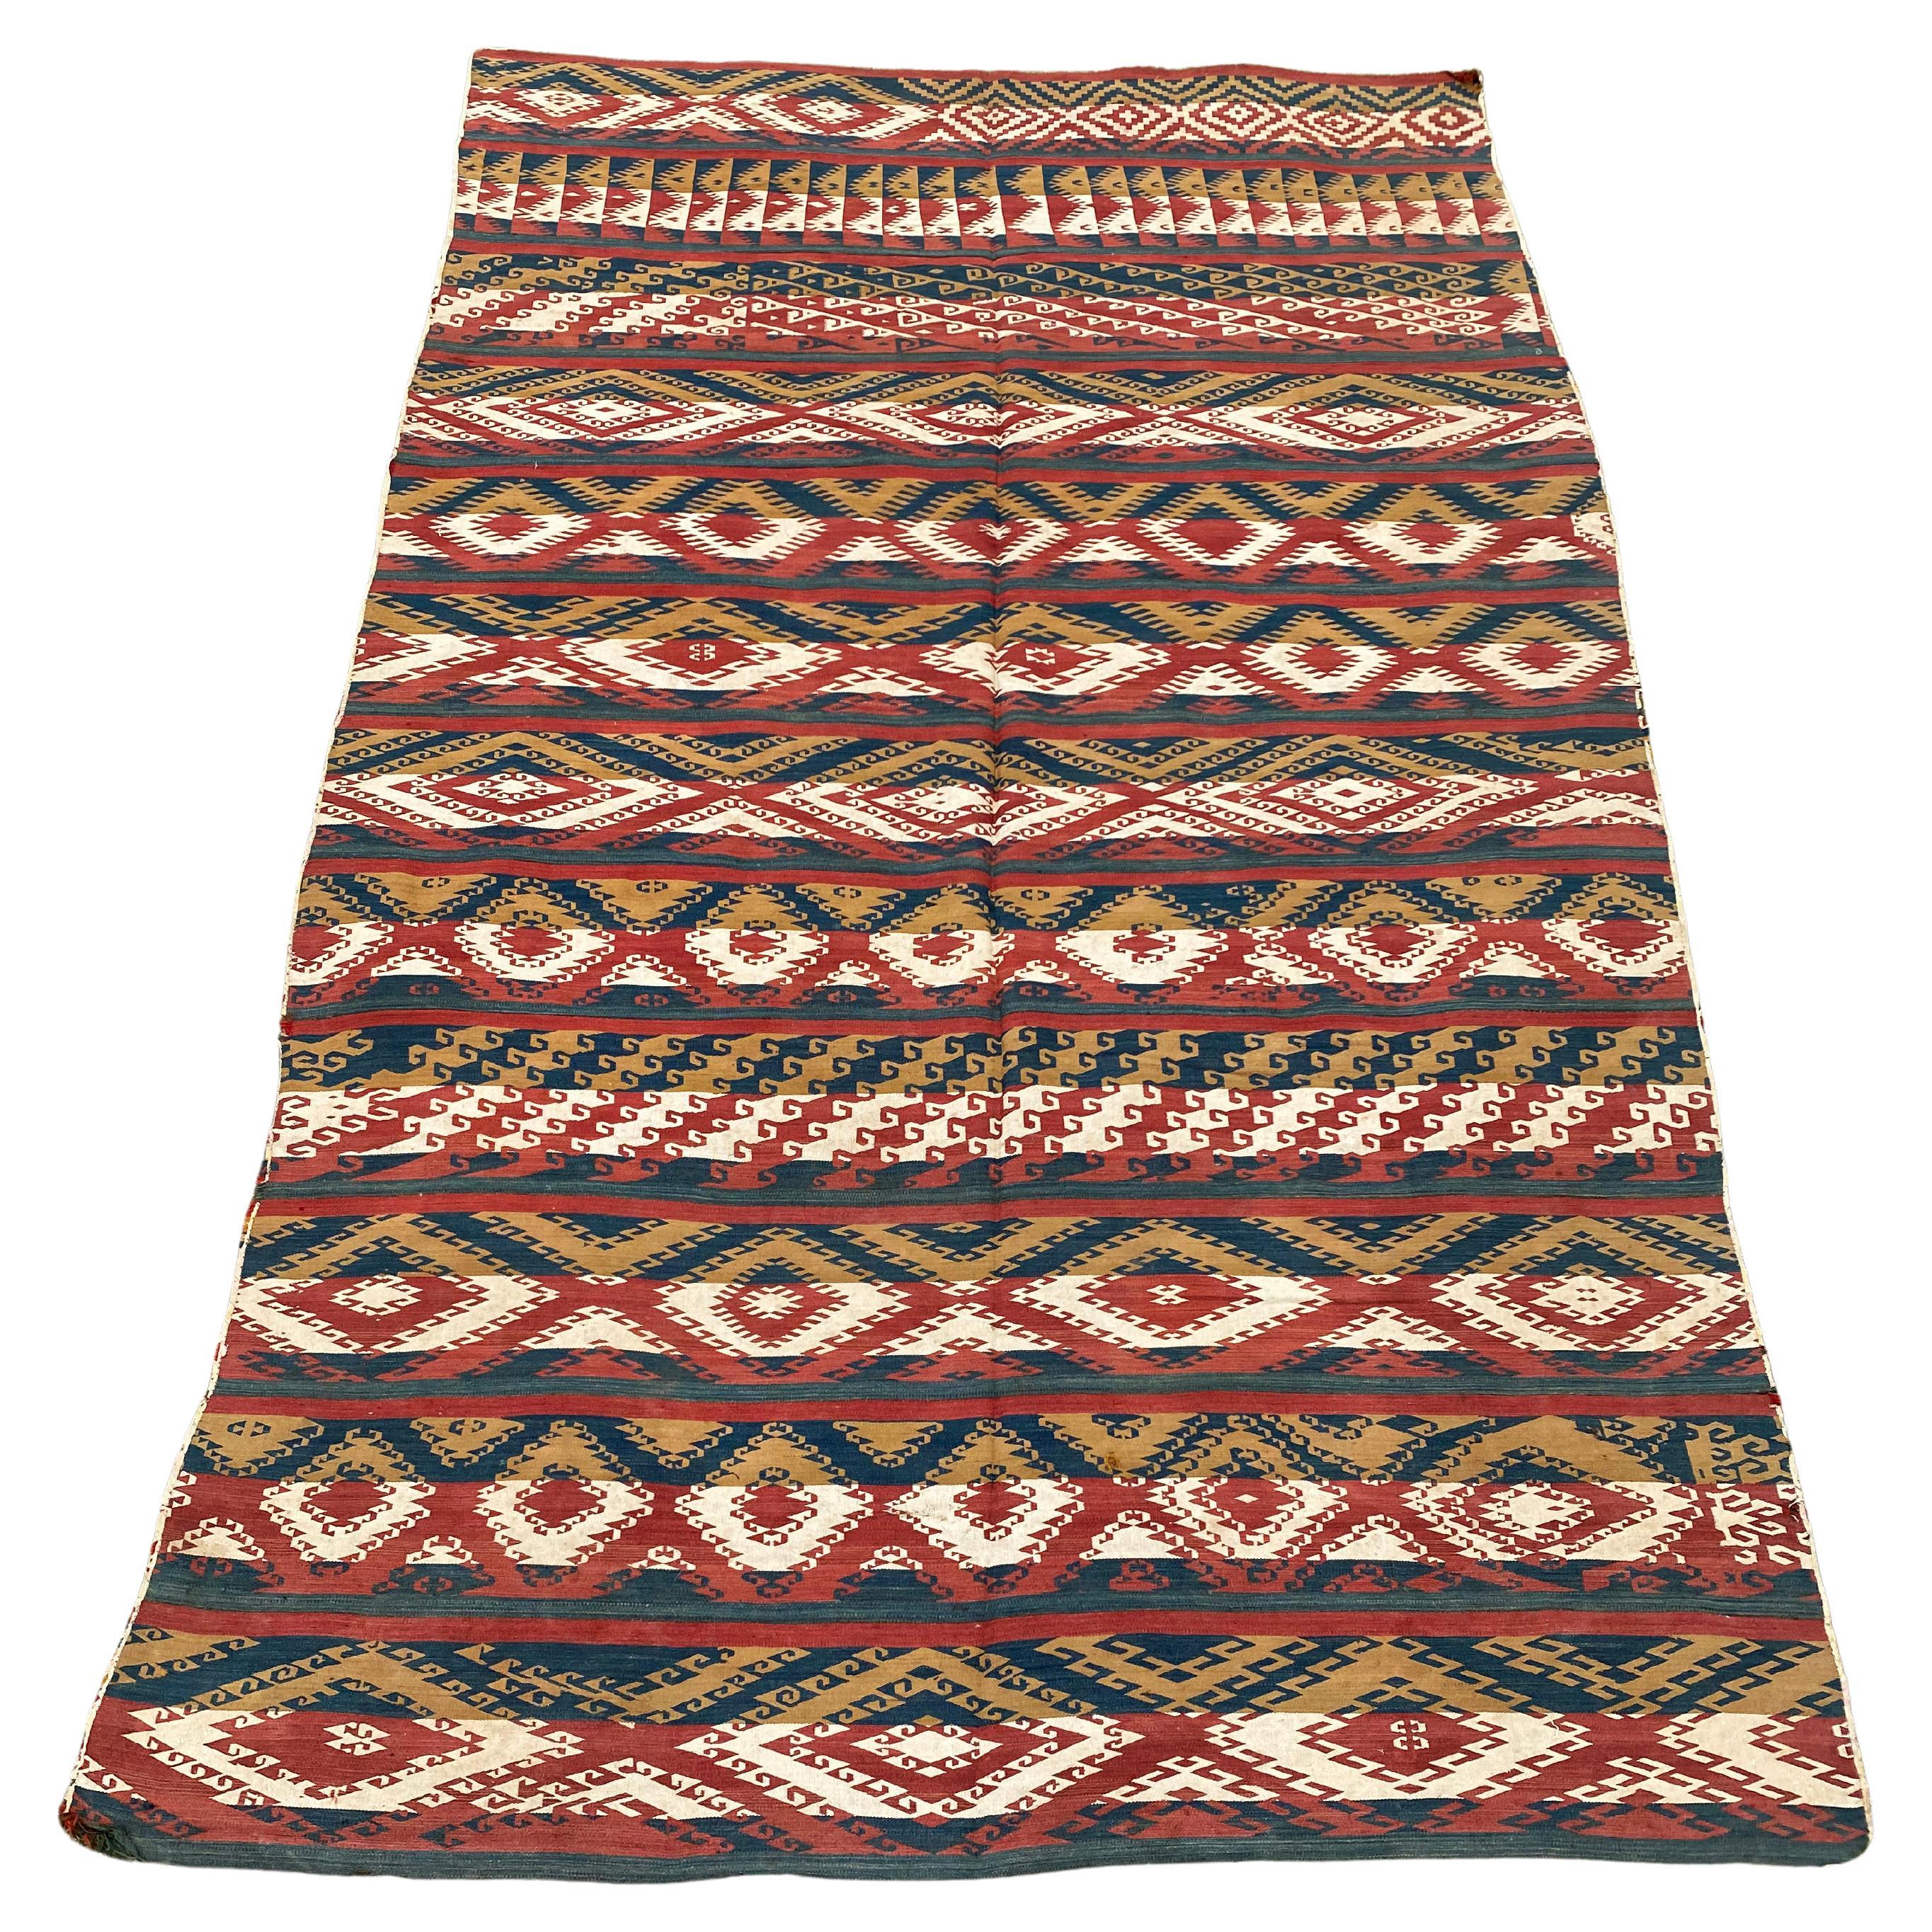 Uzbekistan Ghudjeri Tribal Kilim Rug from Wool, Room Size, Early 20th Century For Sale